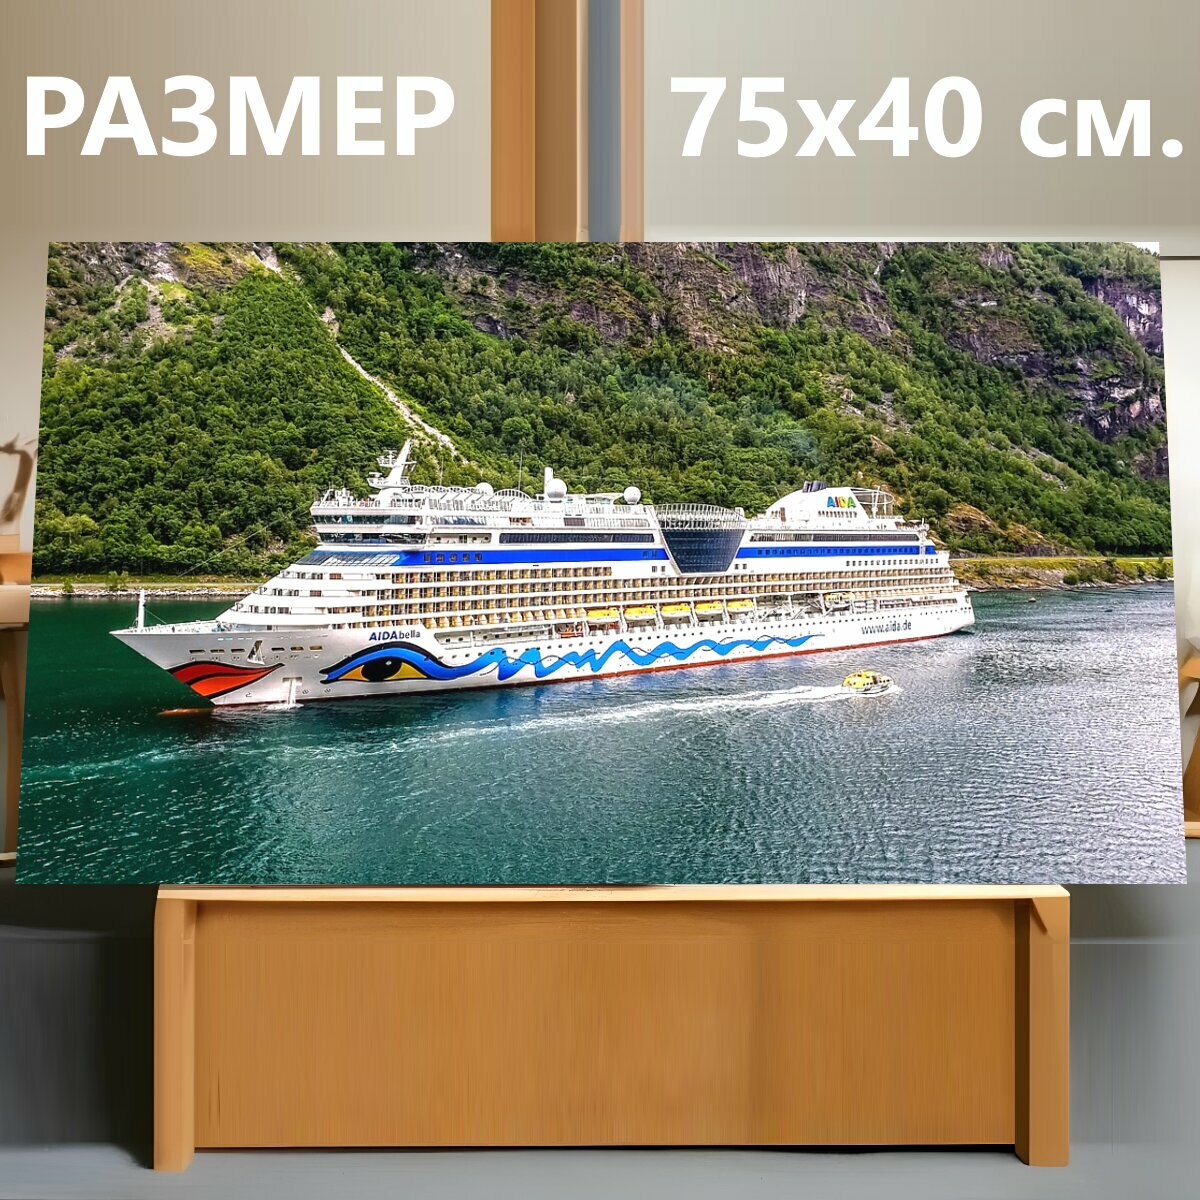 Картина на холсте "Круизное судно, круиз, океан" на подрамнике 75х40 см. для интерьера